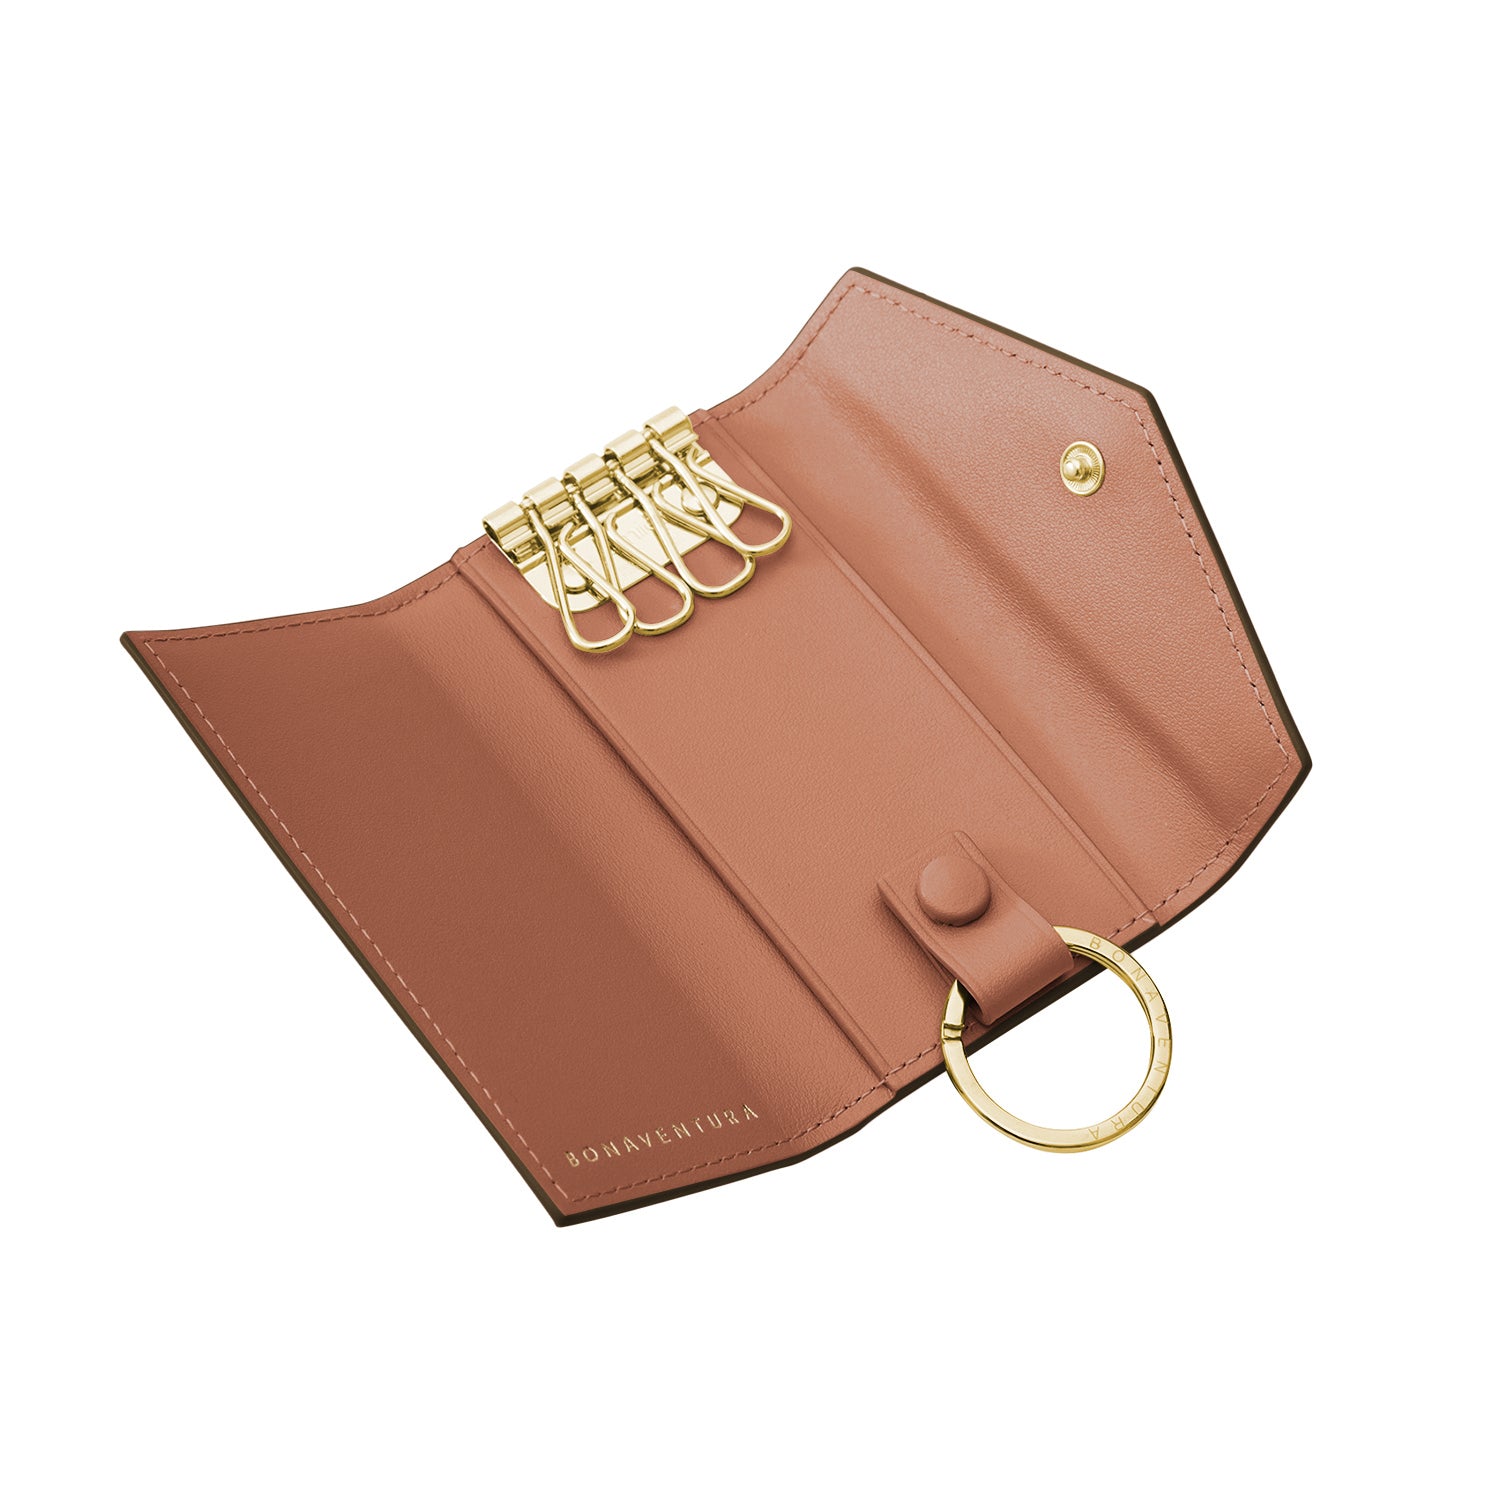 Slim key case in shrink leather